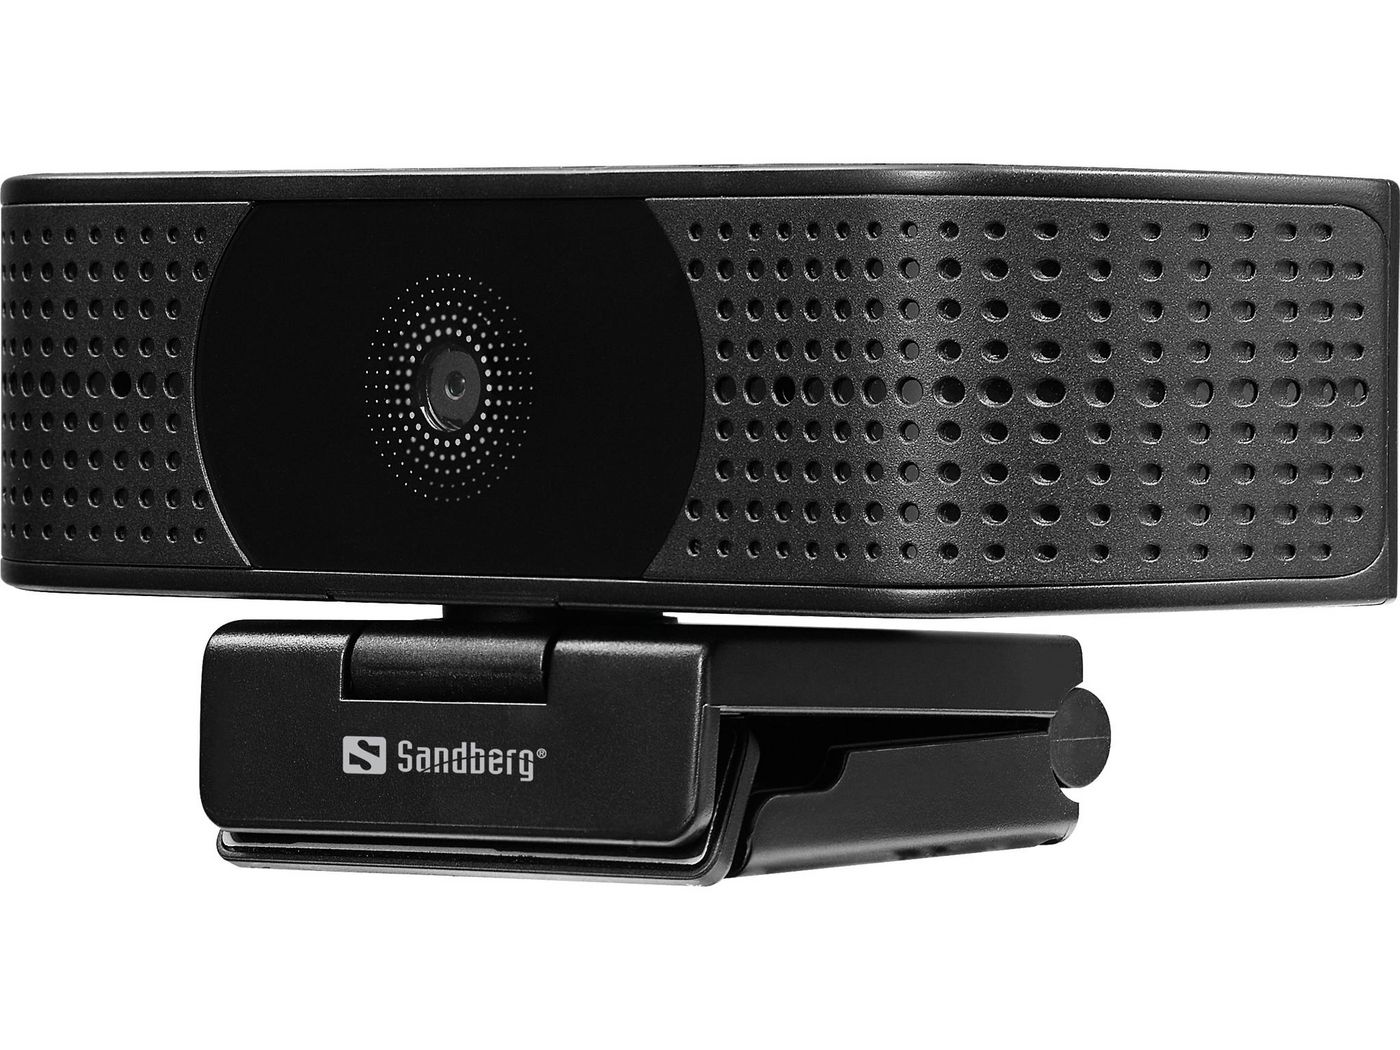 Sandberg 134-28 USB Webcam Pro Elite 4K UHD 